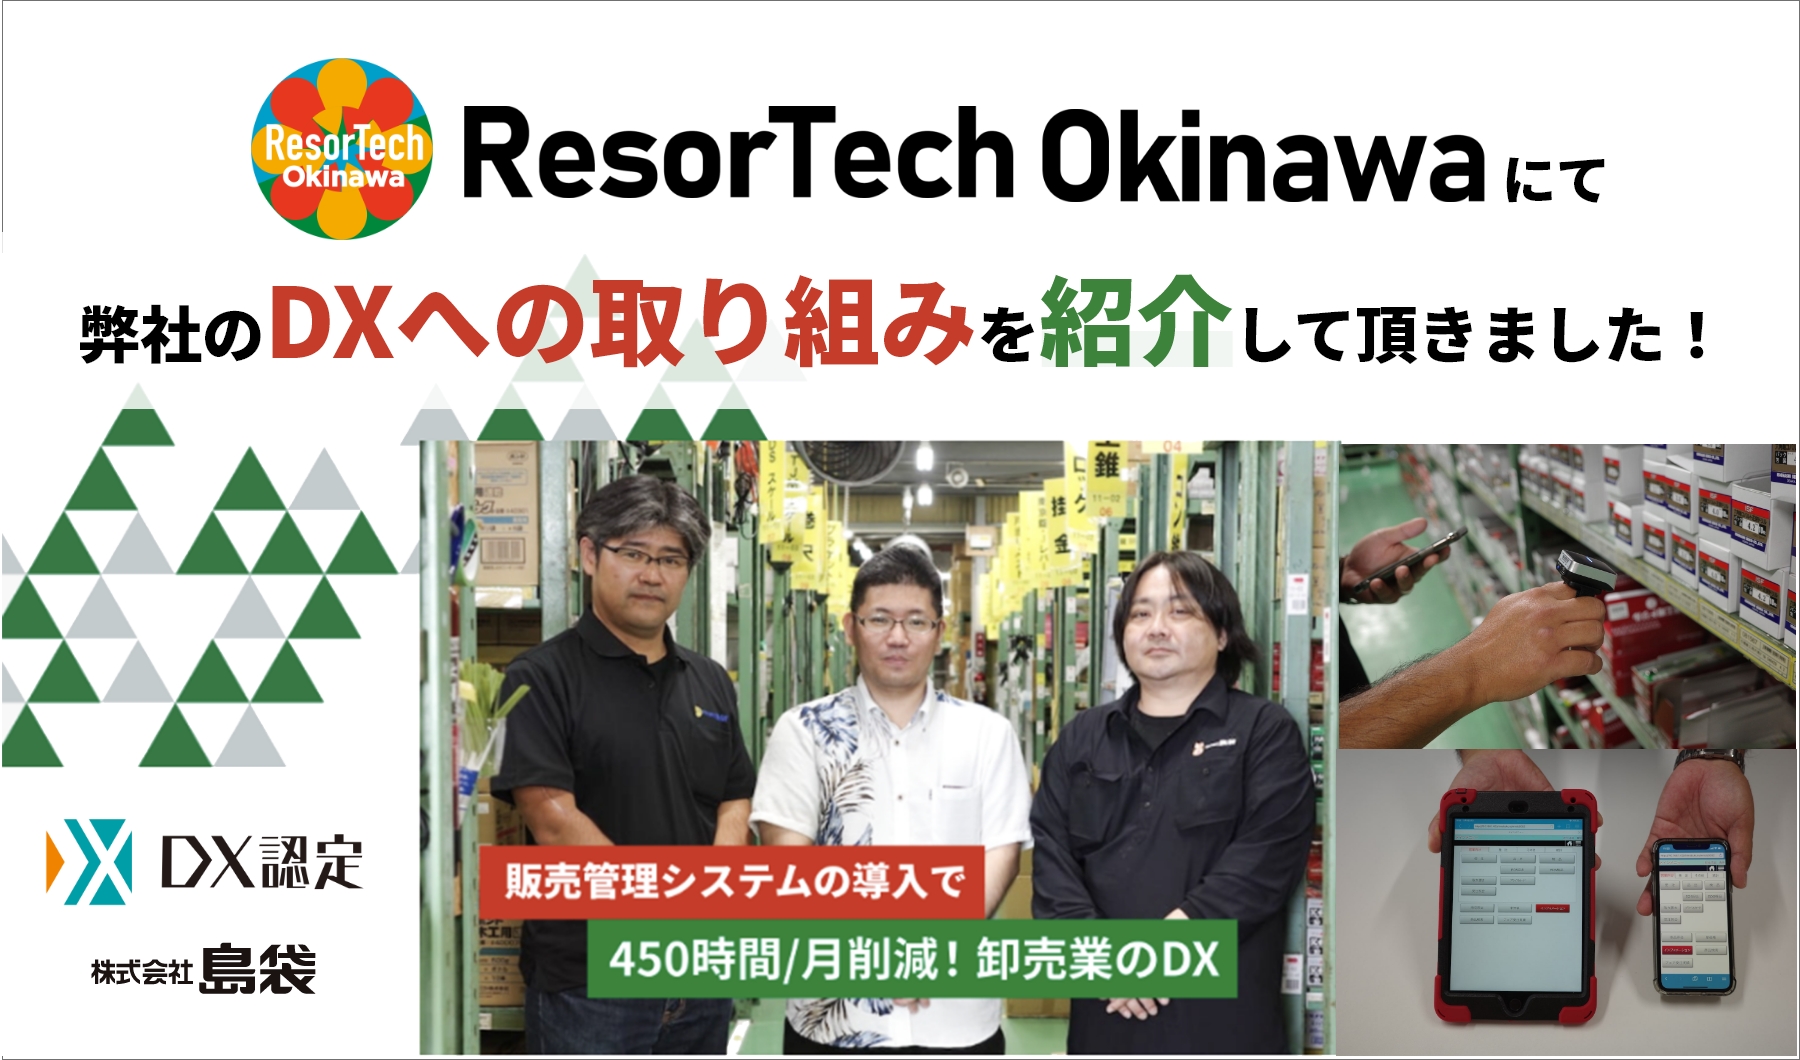 ResorTech Okinawaにて弊社のDXへの取り組みを紹介していただきました。